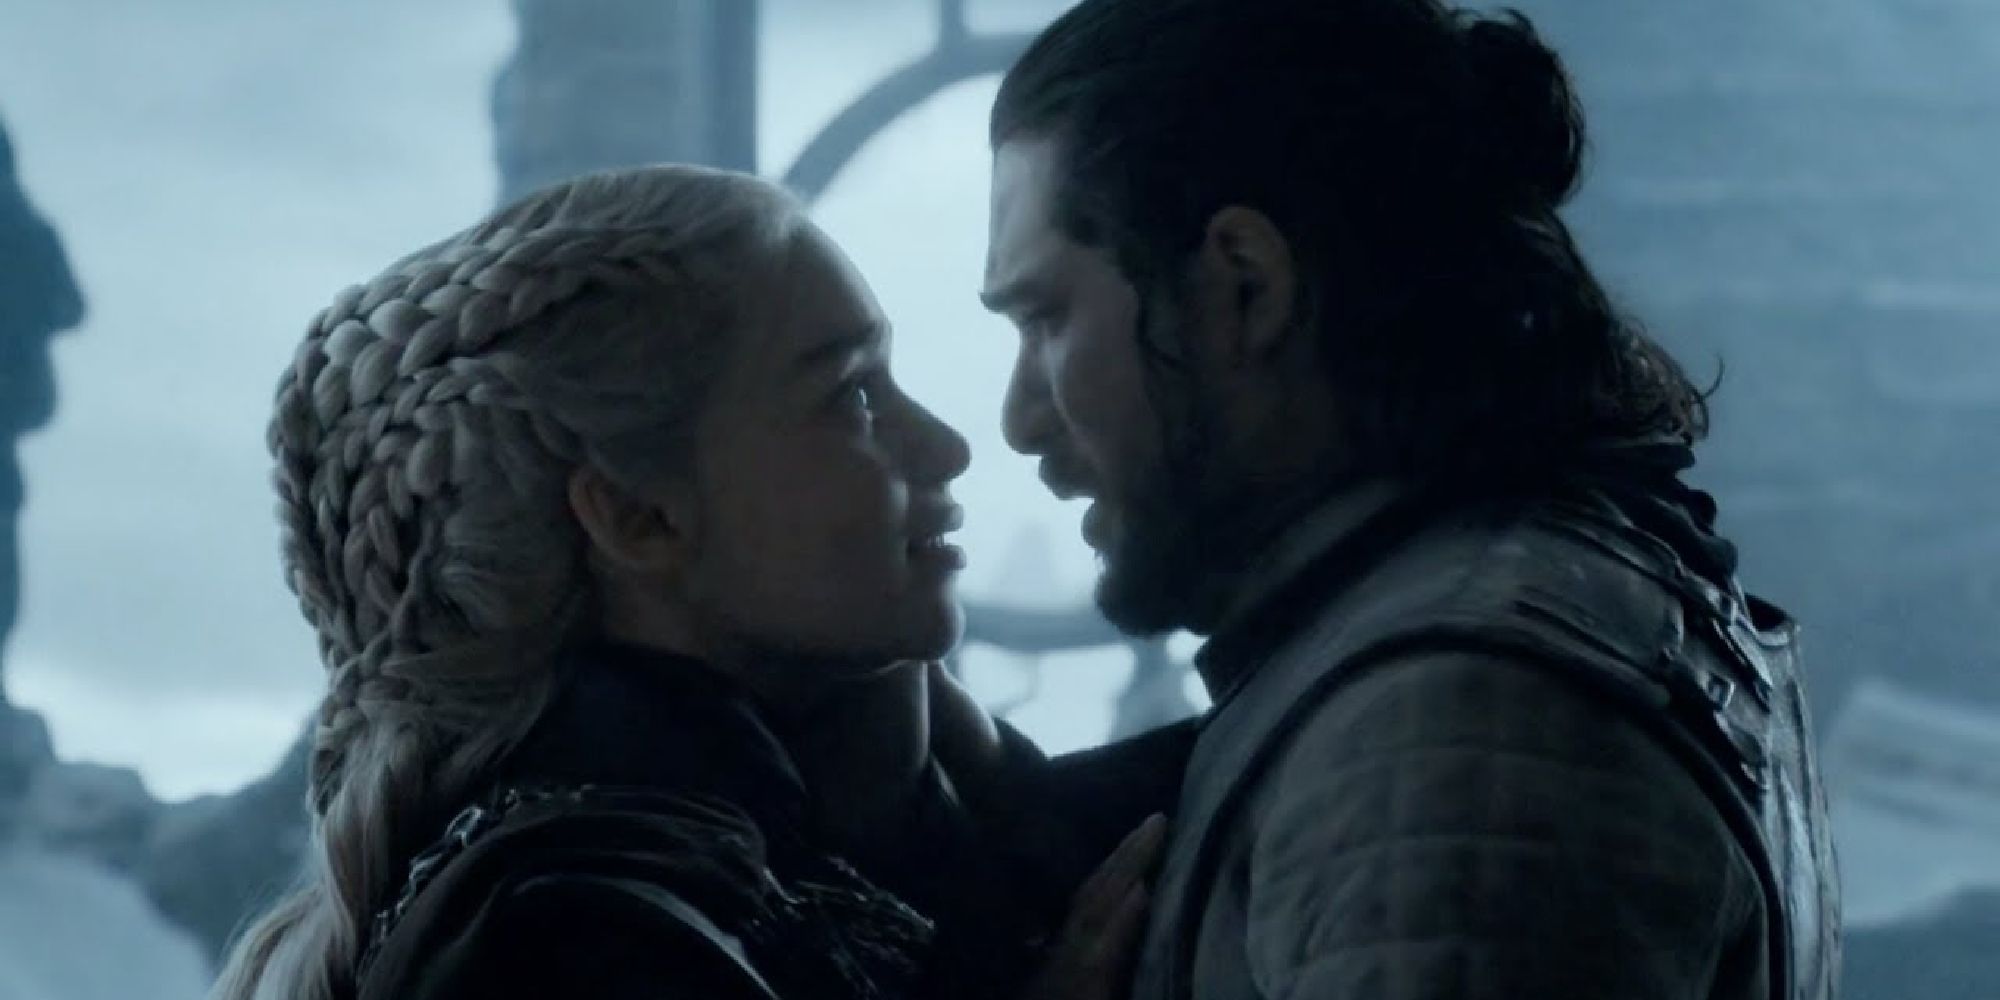 Jon stabbing Daenerys in the finale of Game of Thrones